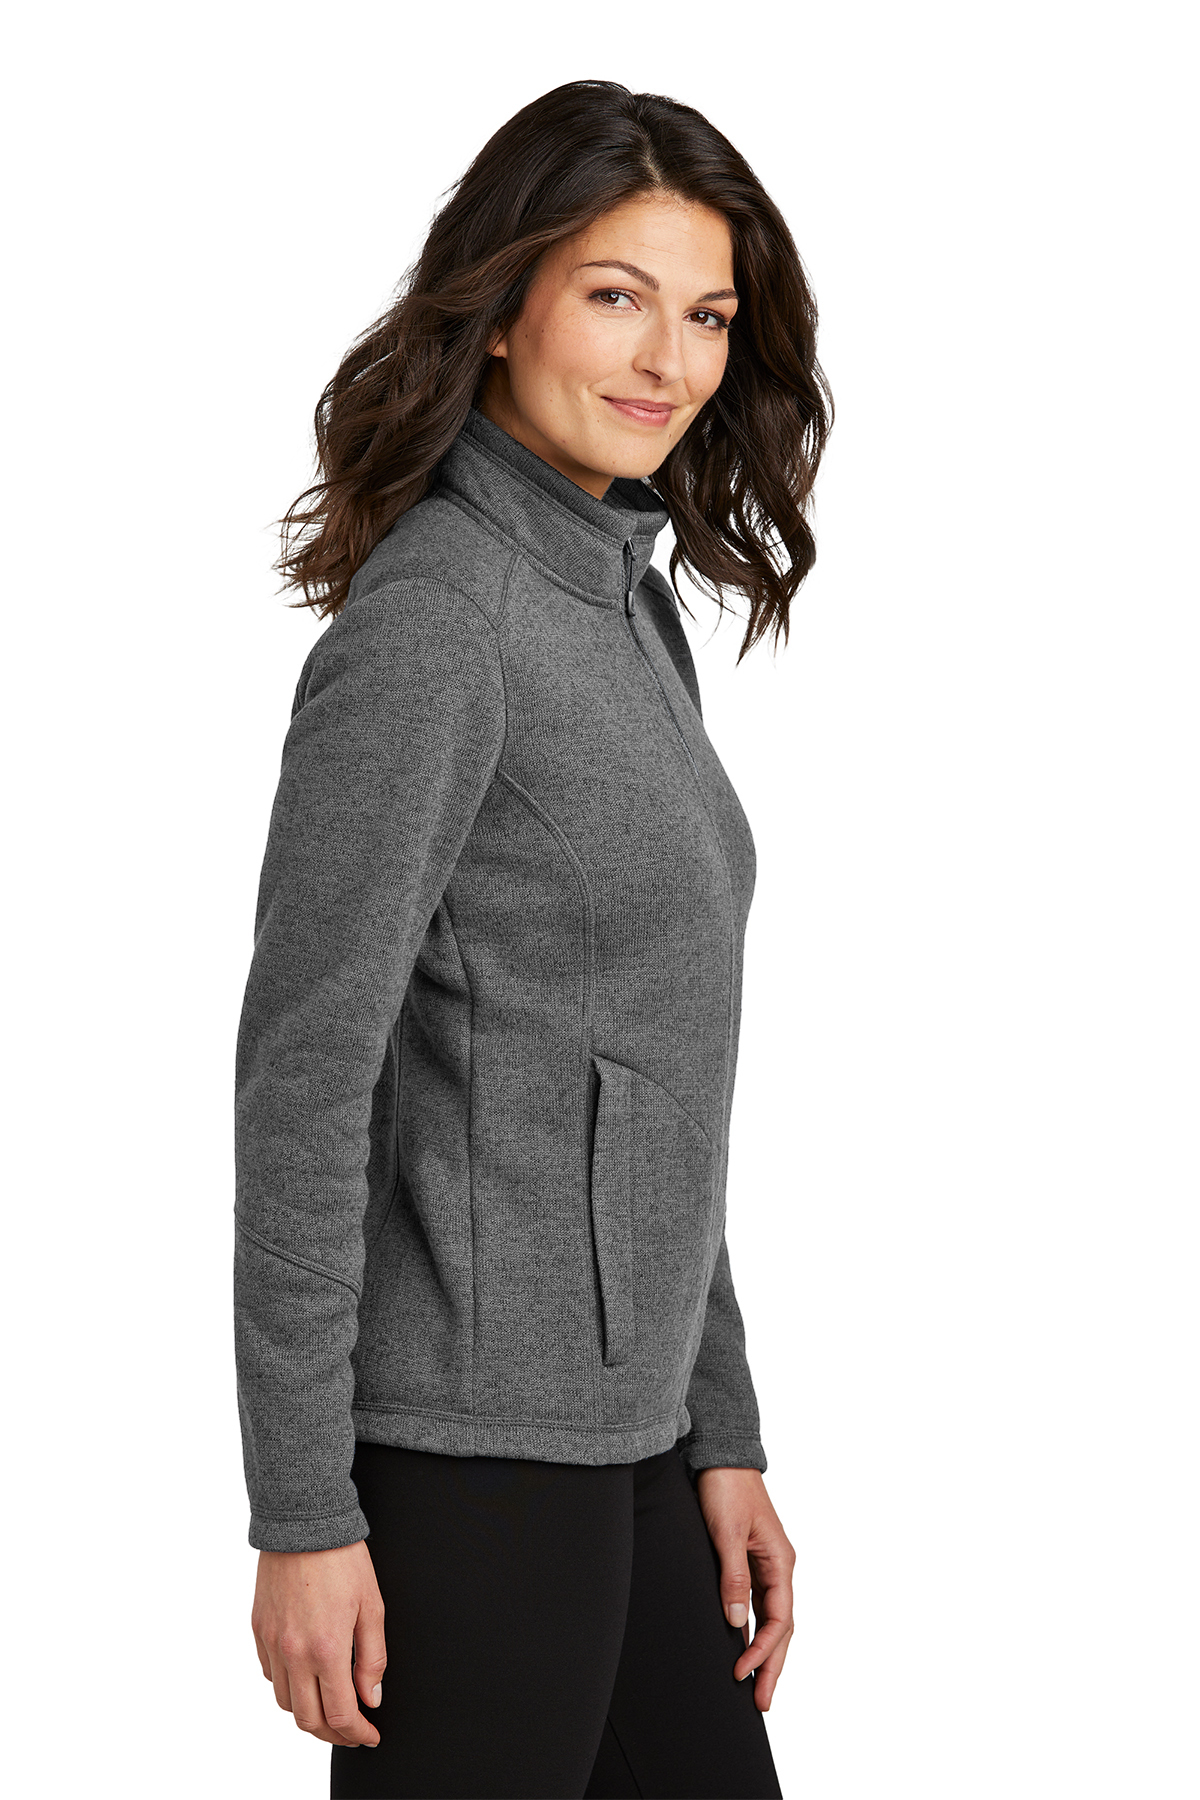 Arc Ladies Sweater Port Jacket Fleece Authority Product | Authority | Port